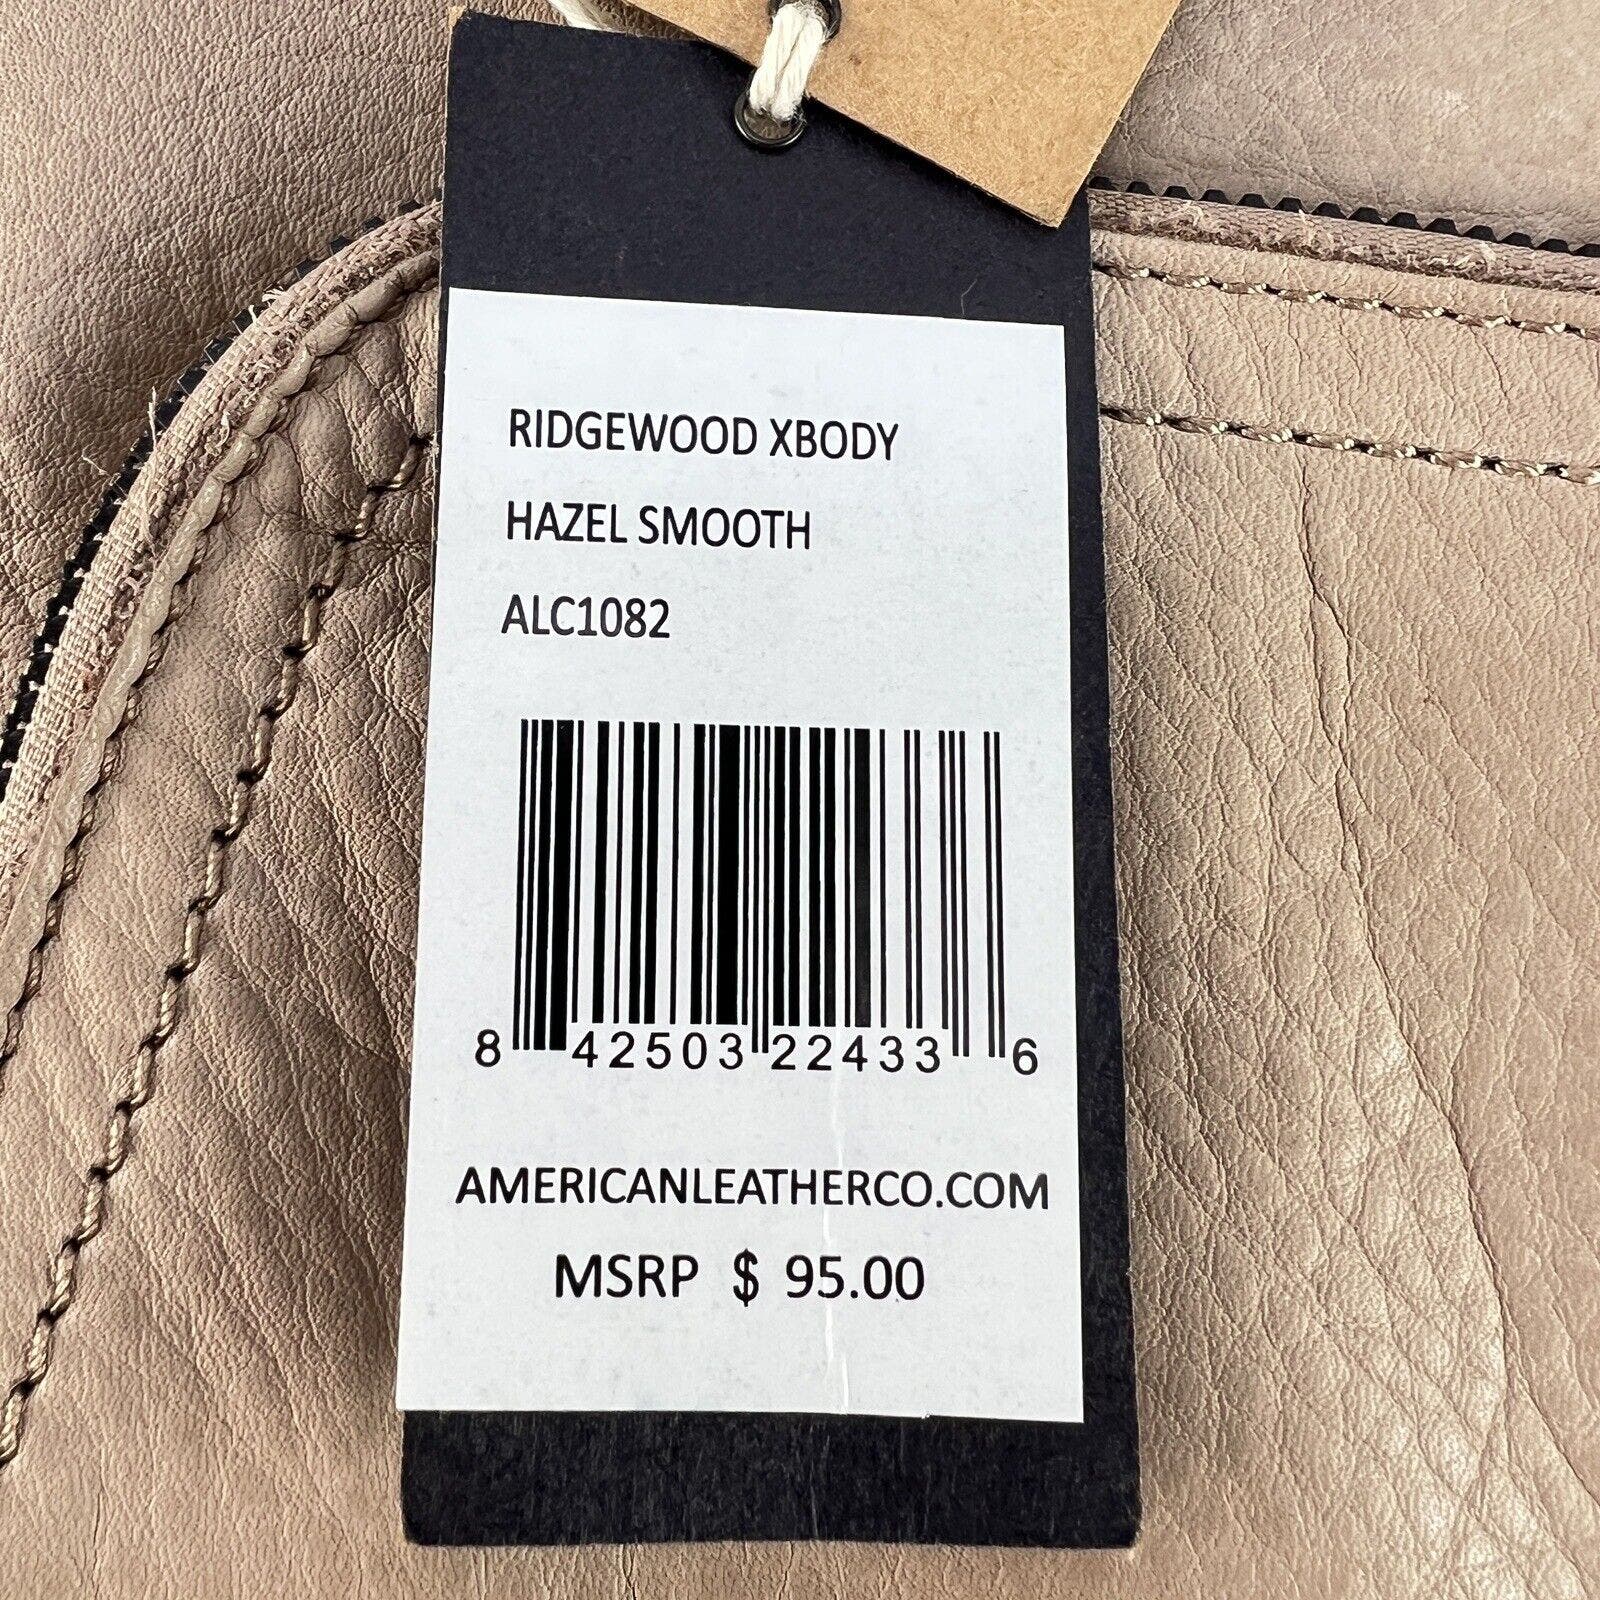 American Leather Co Ridgewood Crossbody Hazel Smooth Bag Purse Beige Neutral